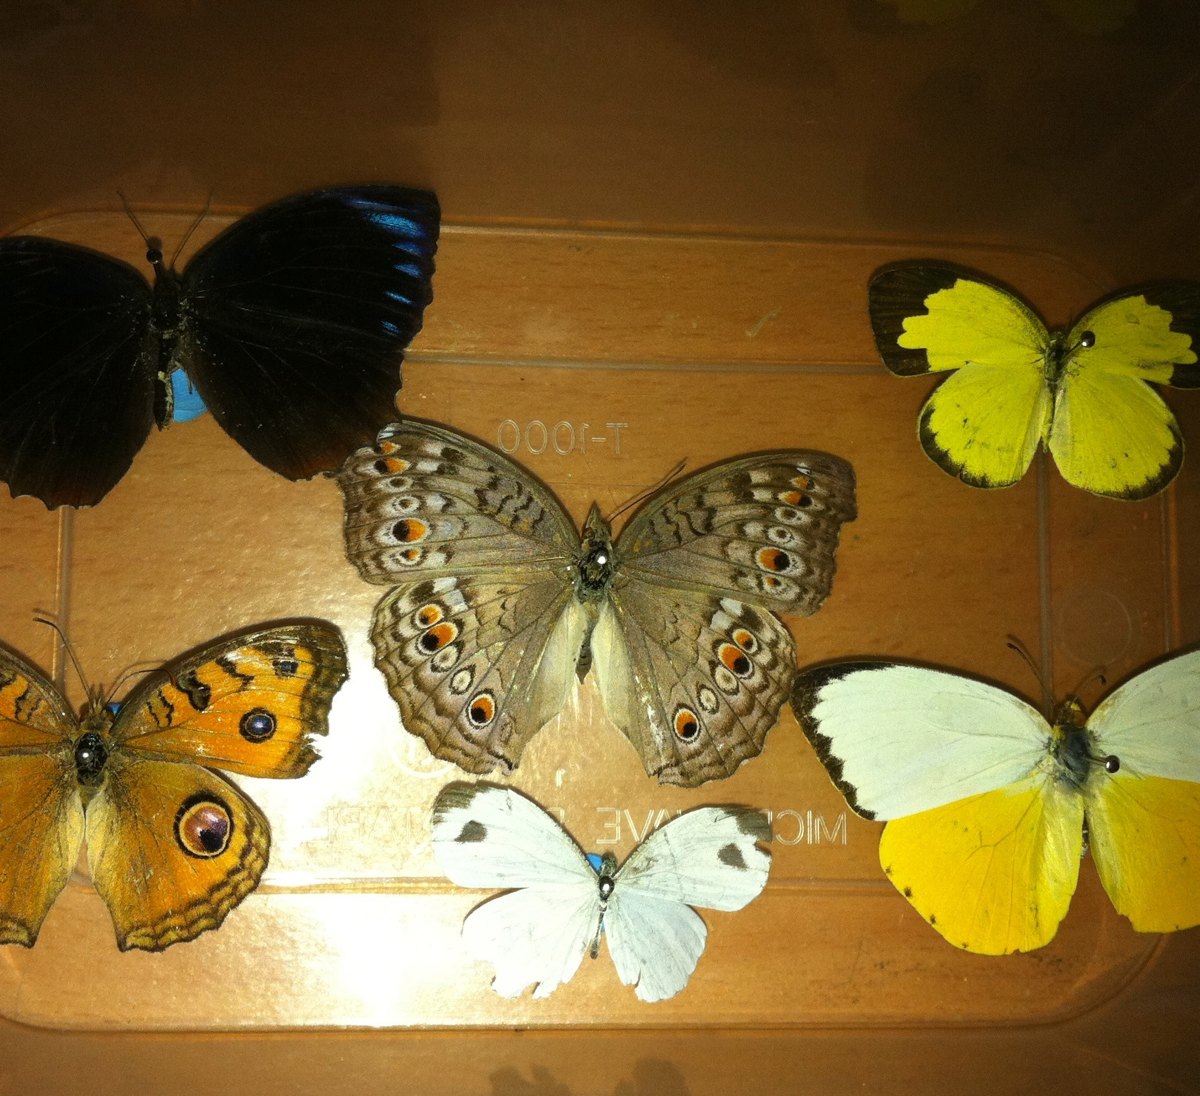 Common butterflies of my area